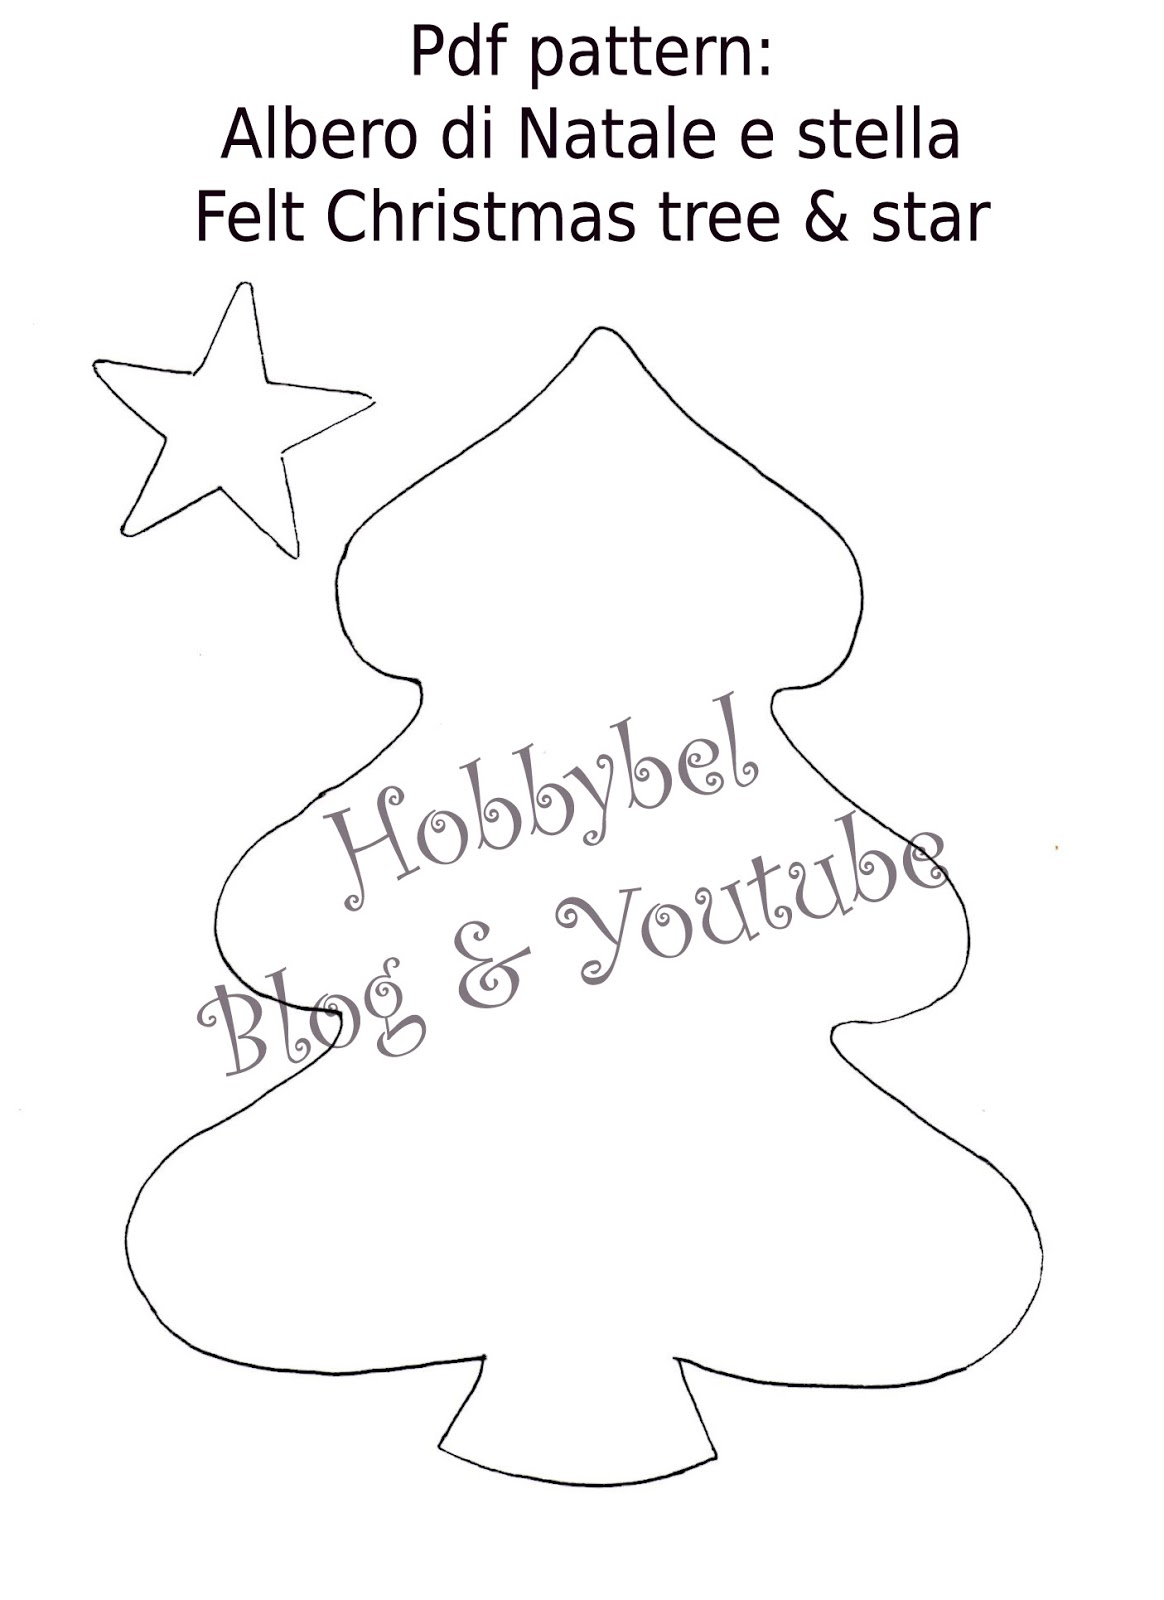 Decorazioni Natalizie Youtube.Hobbybel Blog Youtube Tutorial Decorazioni Di Natale Fai Da Te Diy Christmas Ornaments